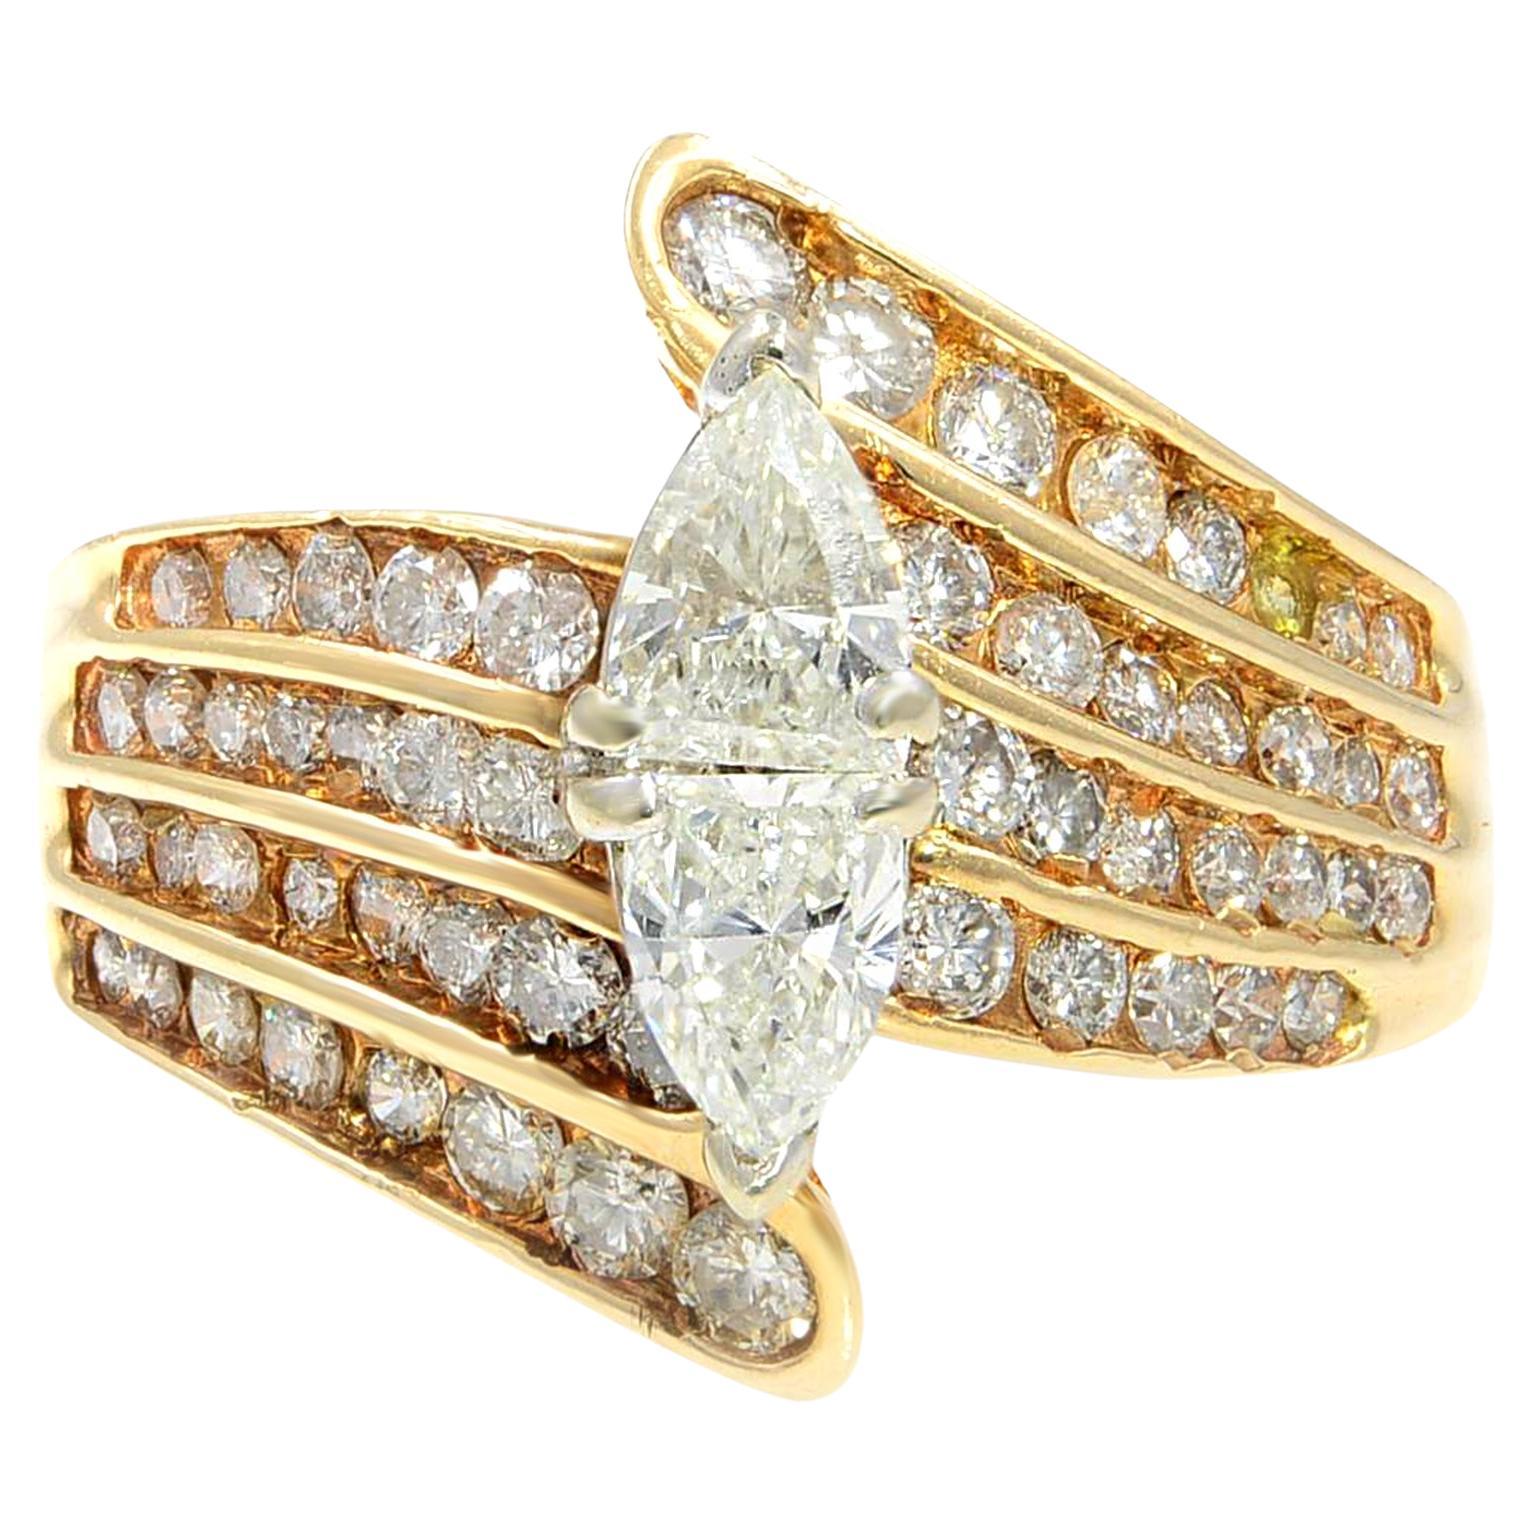 Rachel Koen Marquise Illusion Diamond Engagement Ring 14K Gold 1.75 Cttw SZ 6.75 For Sale